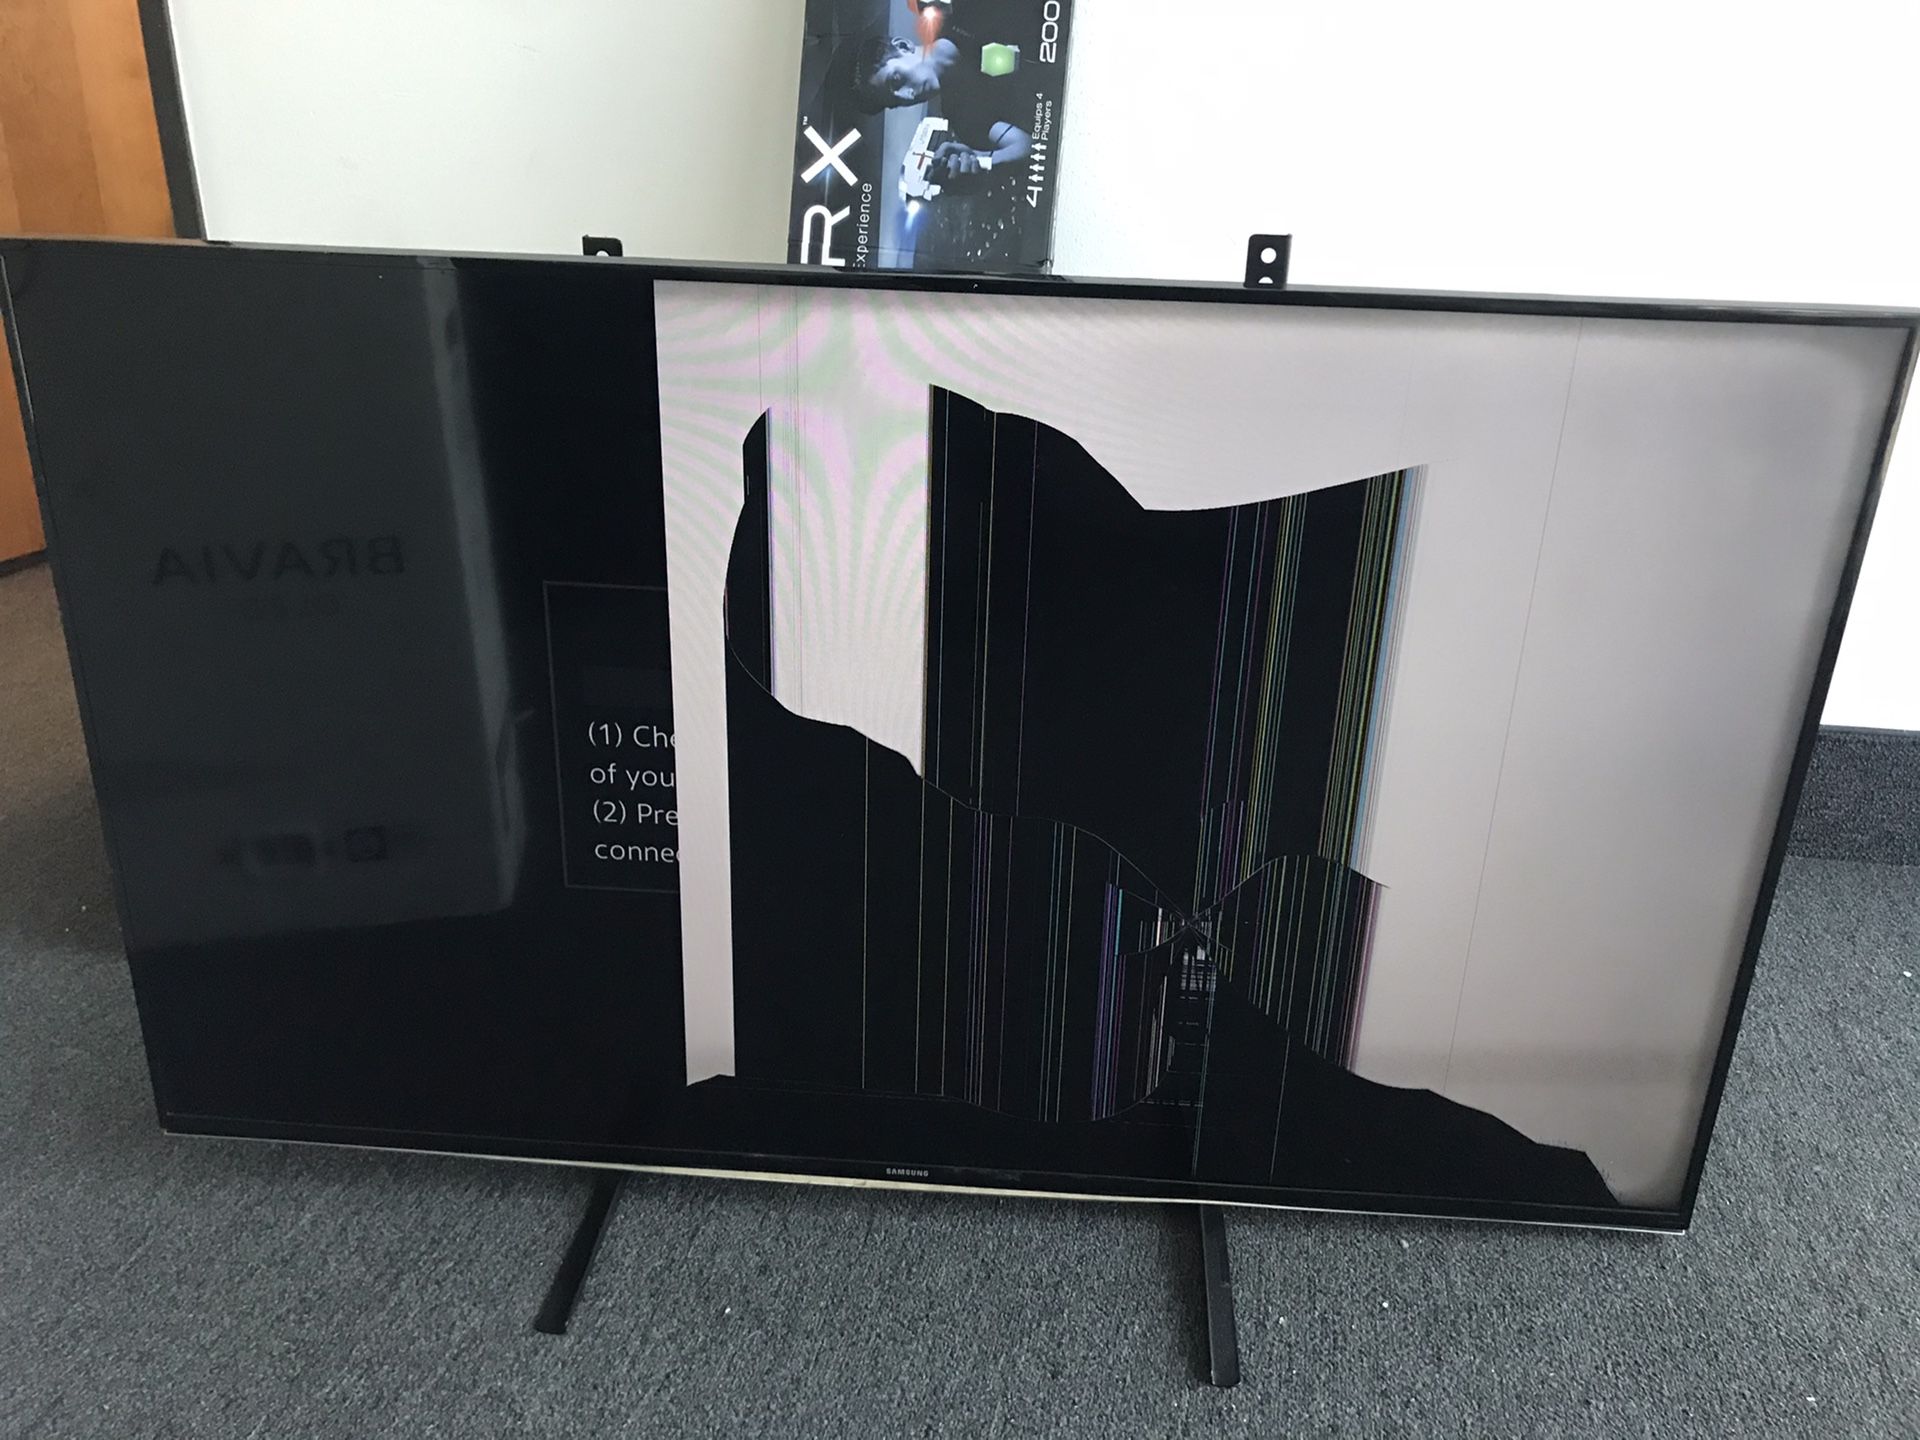 Samsung 55 inch smart TV (broken screen)